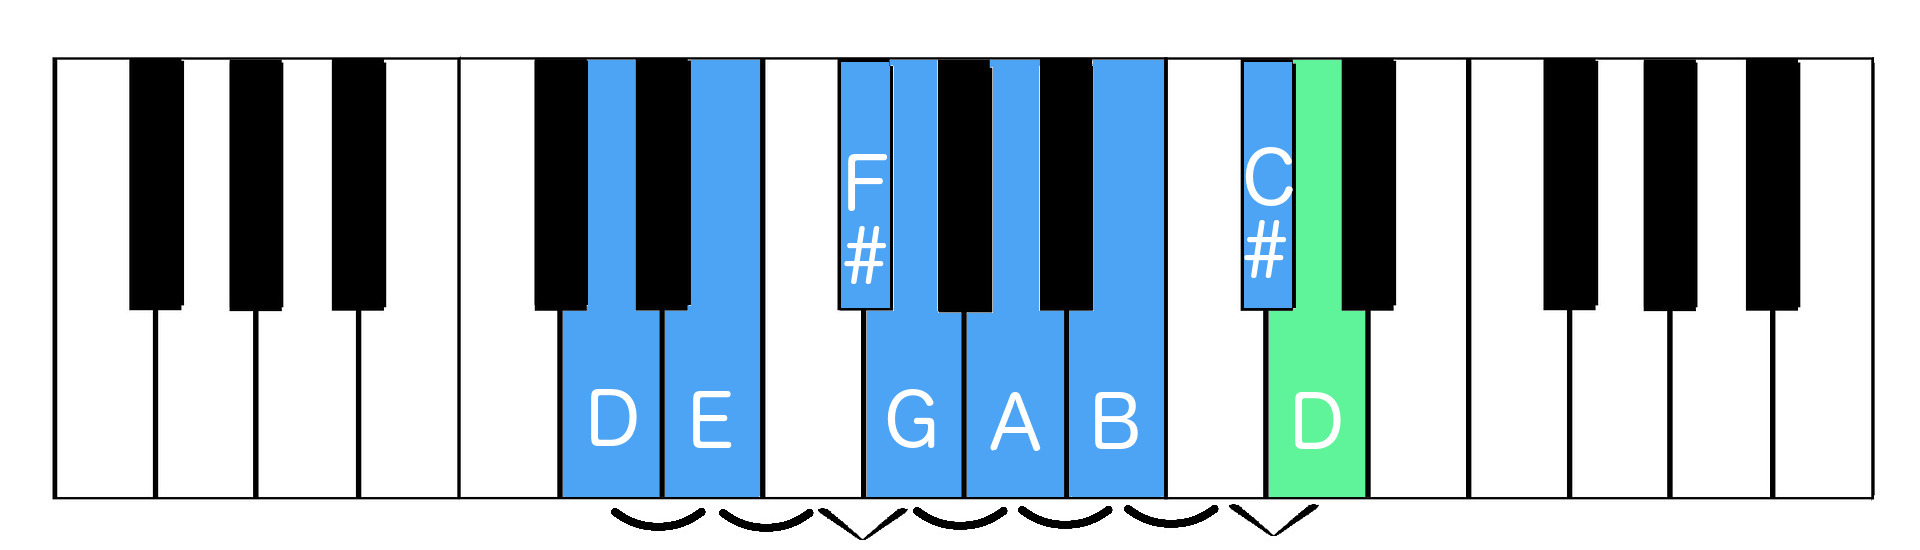 d flat minor piano scale